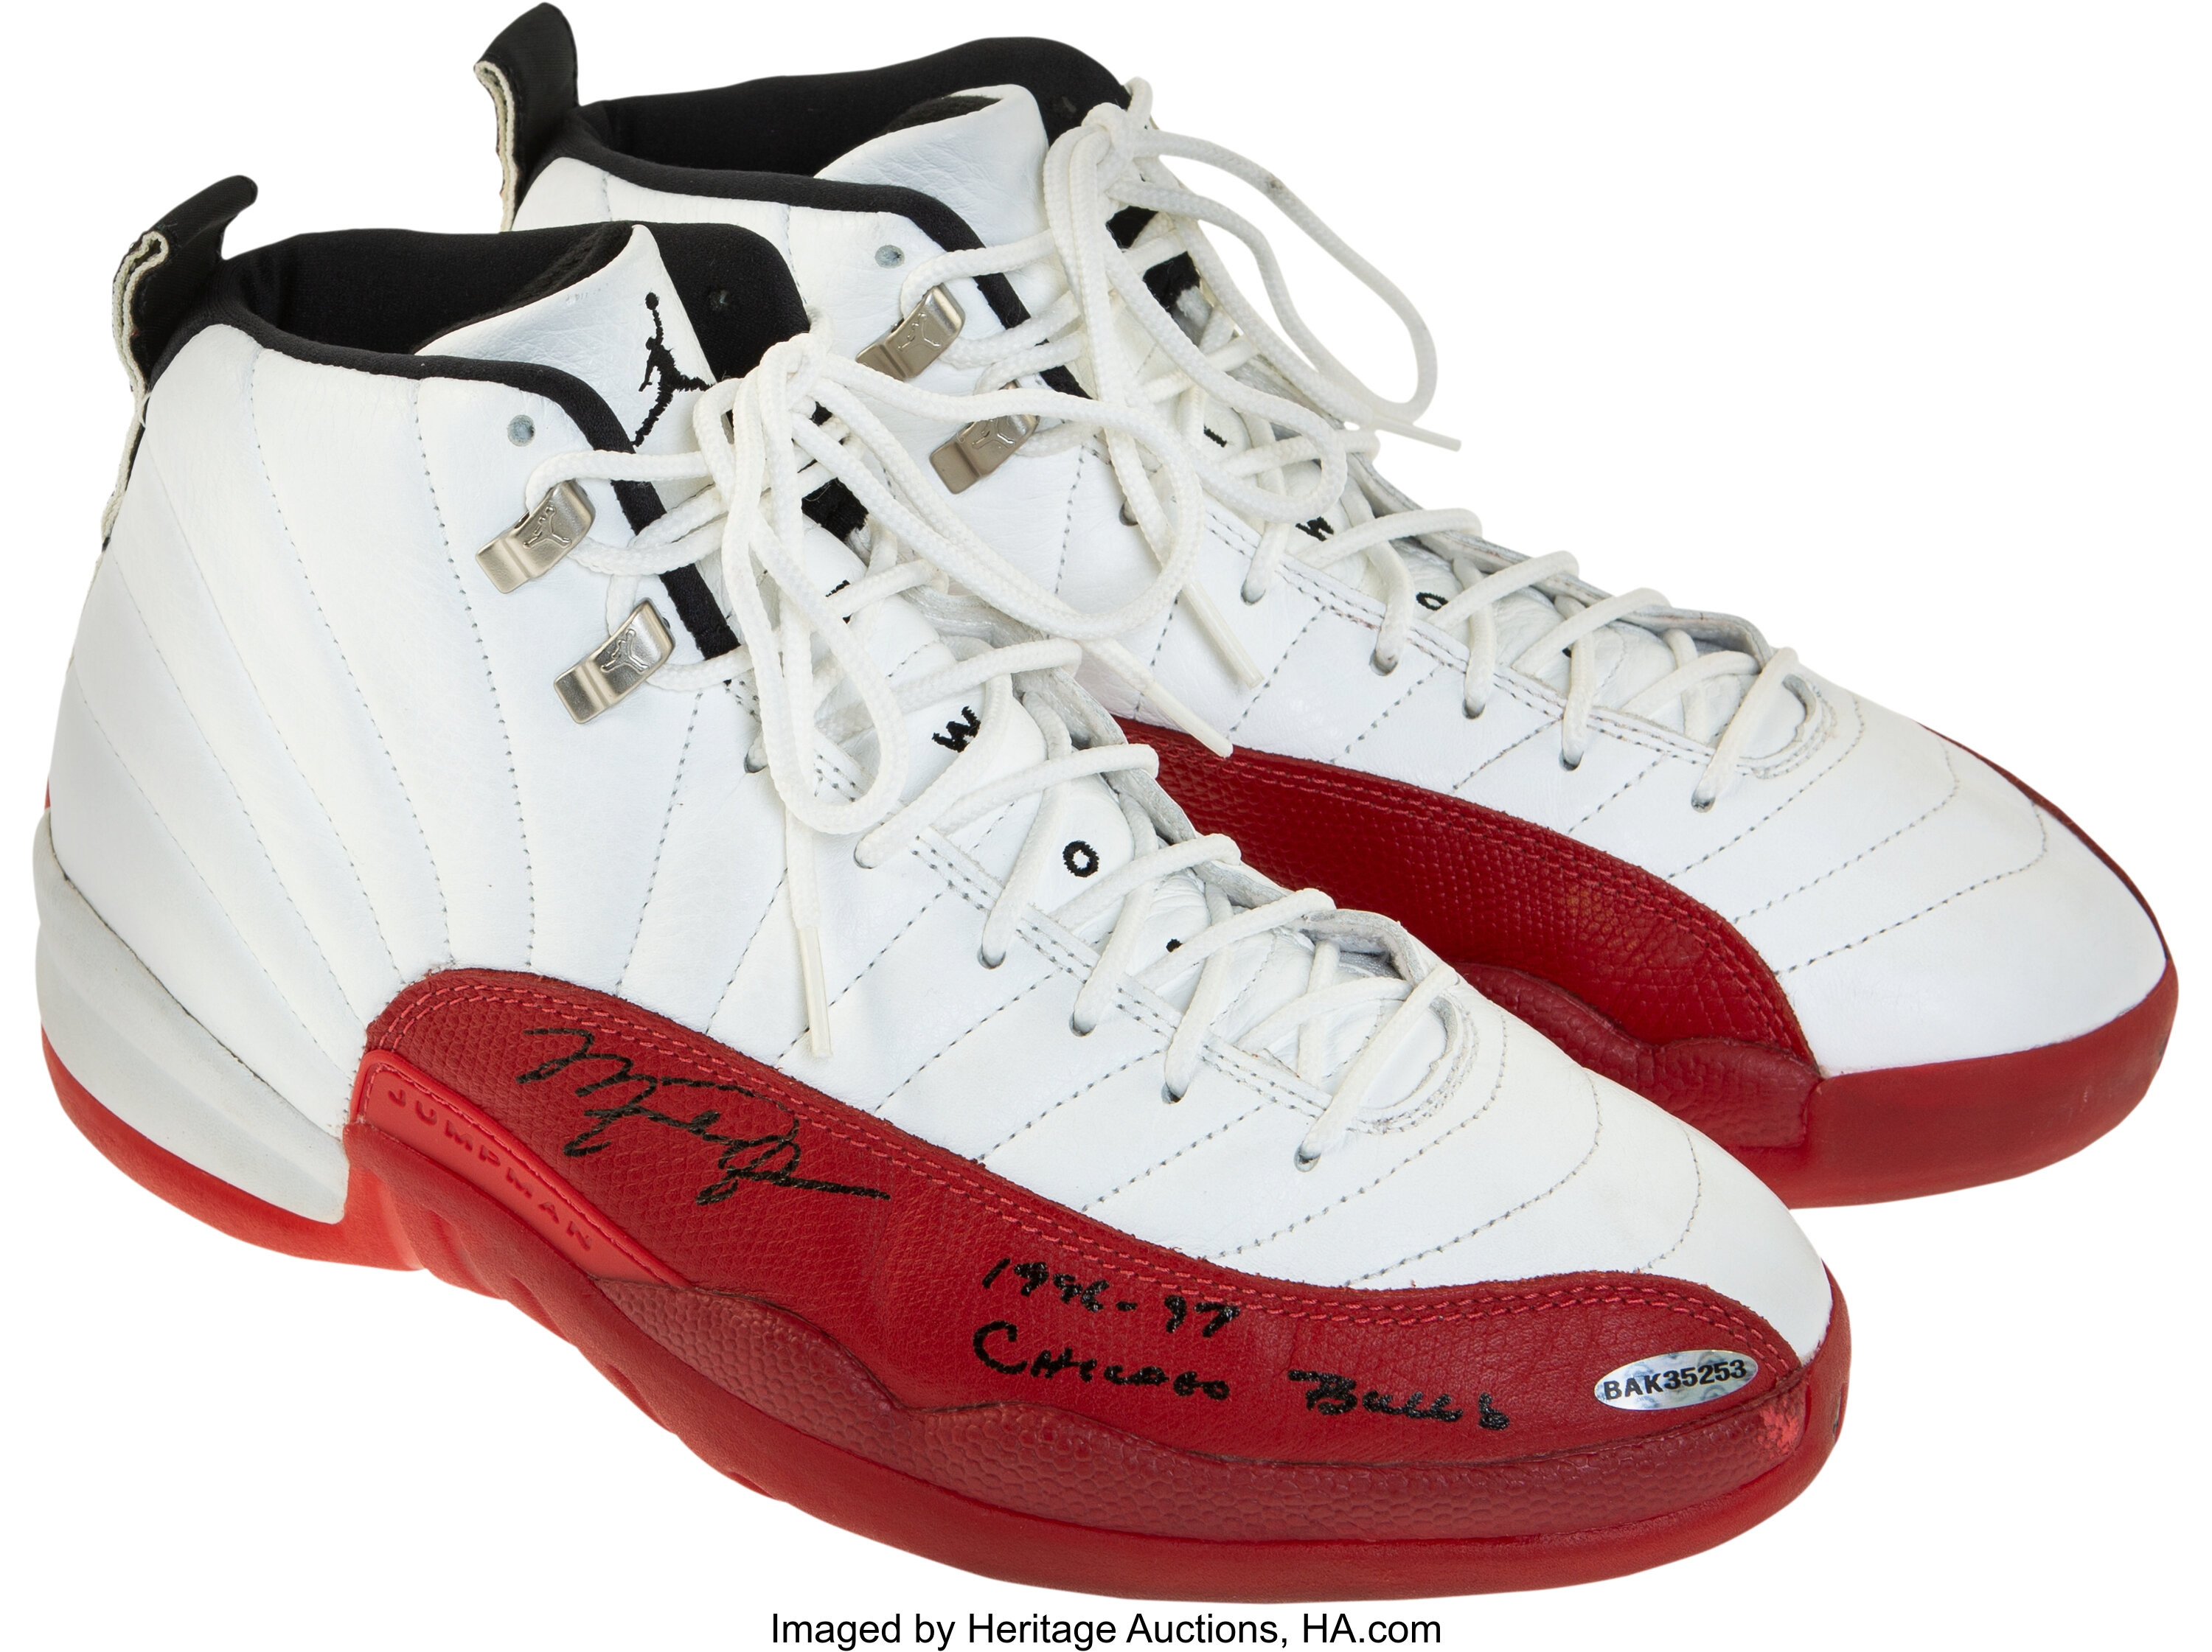 Signed Michael Jordan Basketball (1996) Cologne Collab : r/SportsMemorabilia